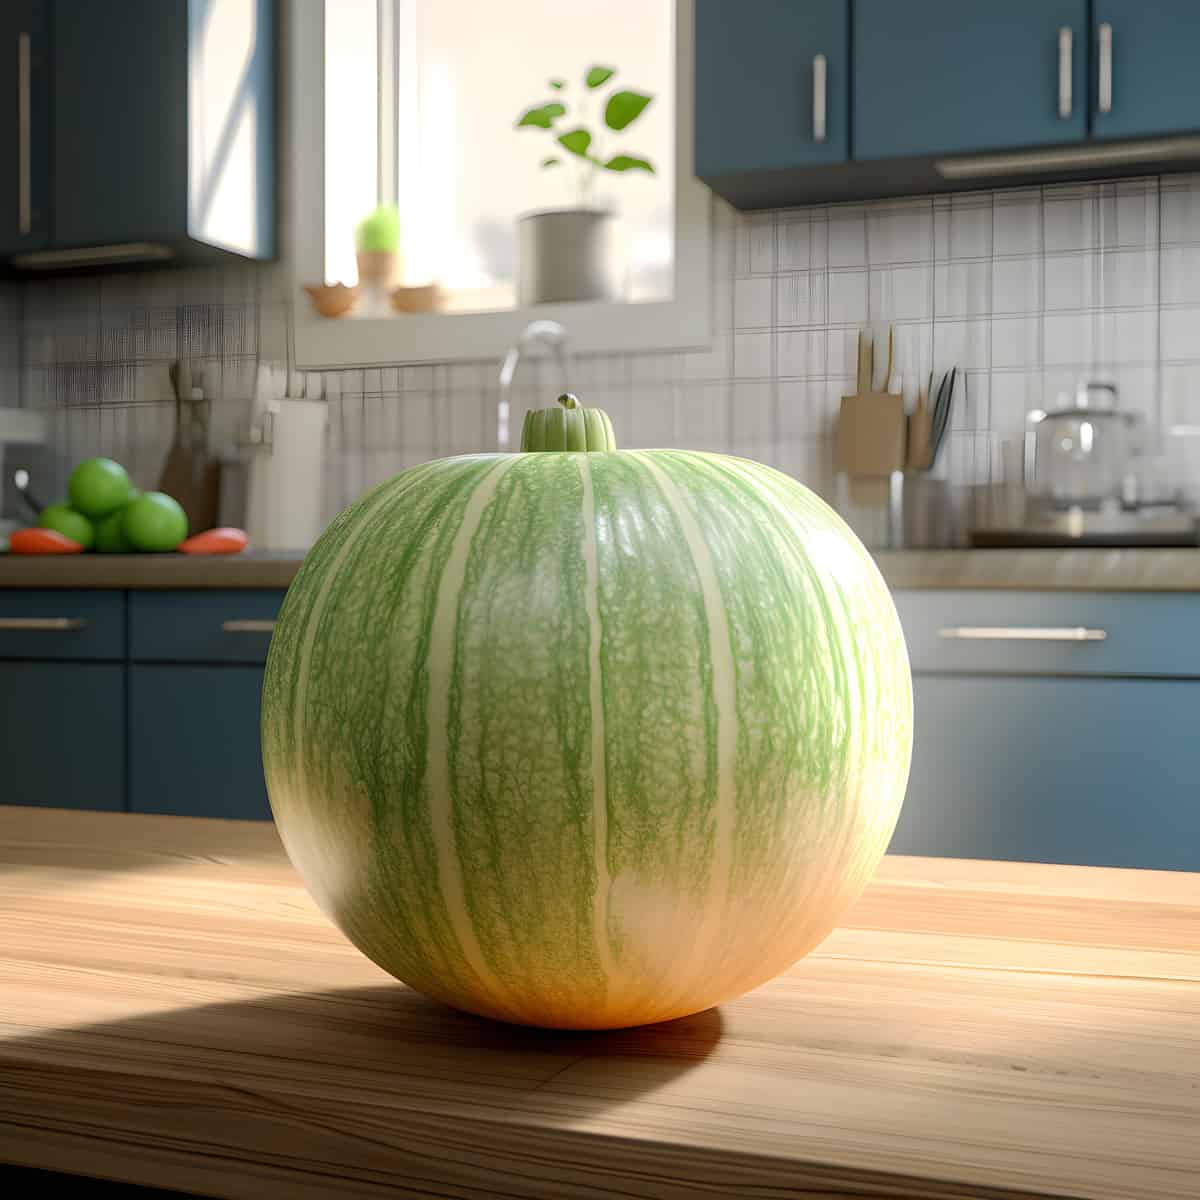 Bailan Melon on a kitchen counter